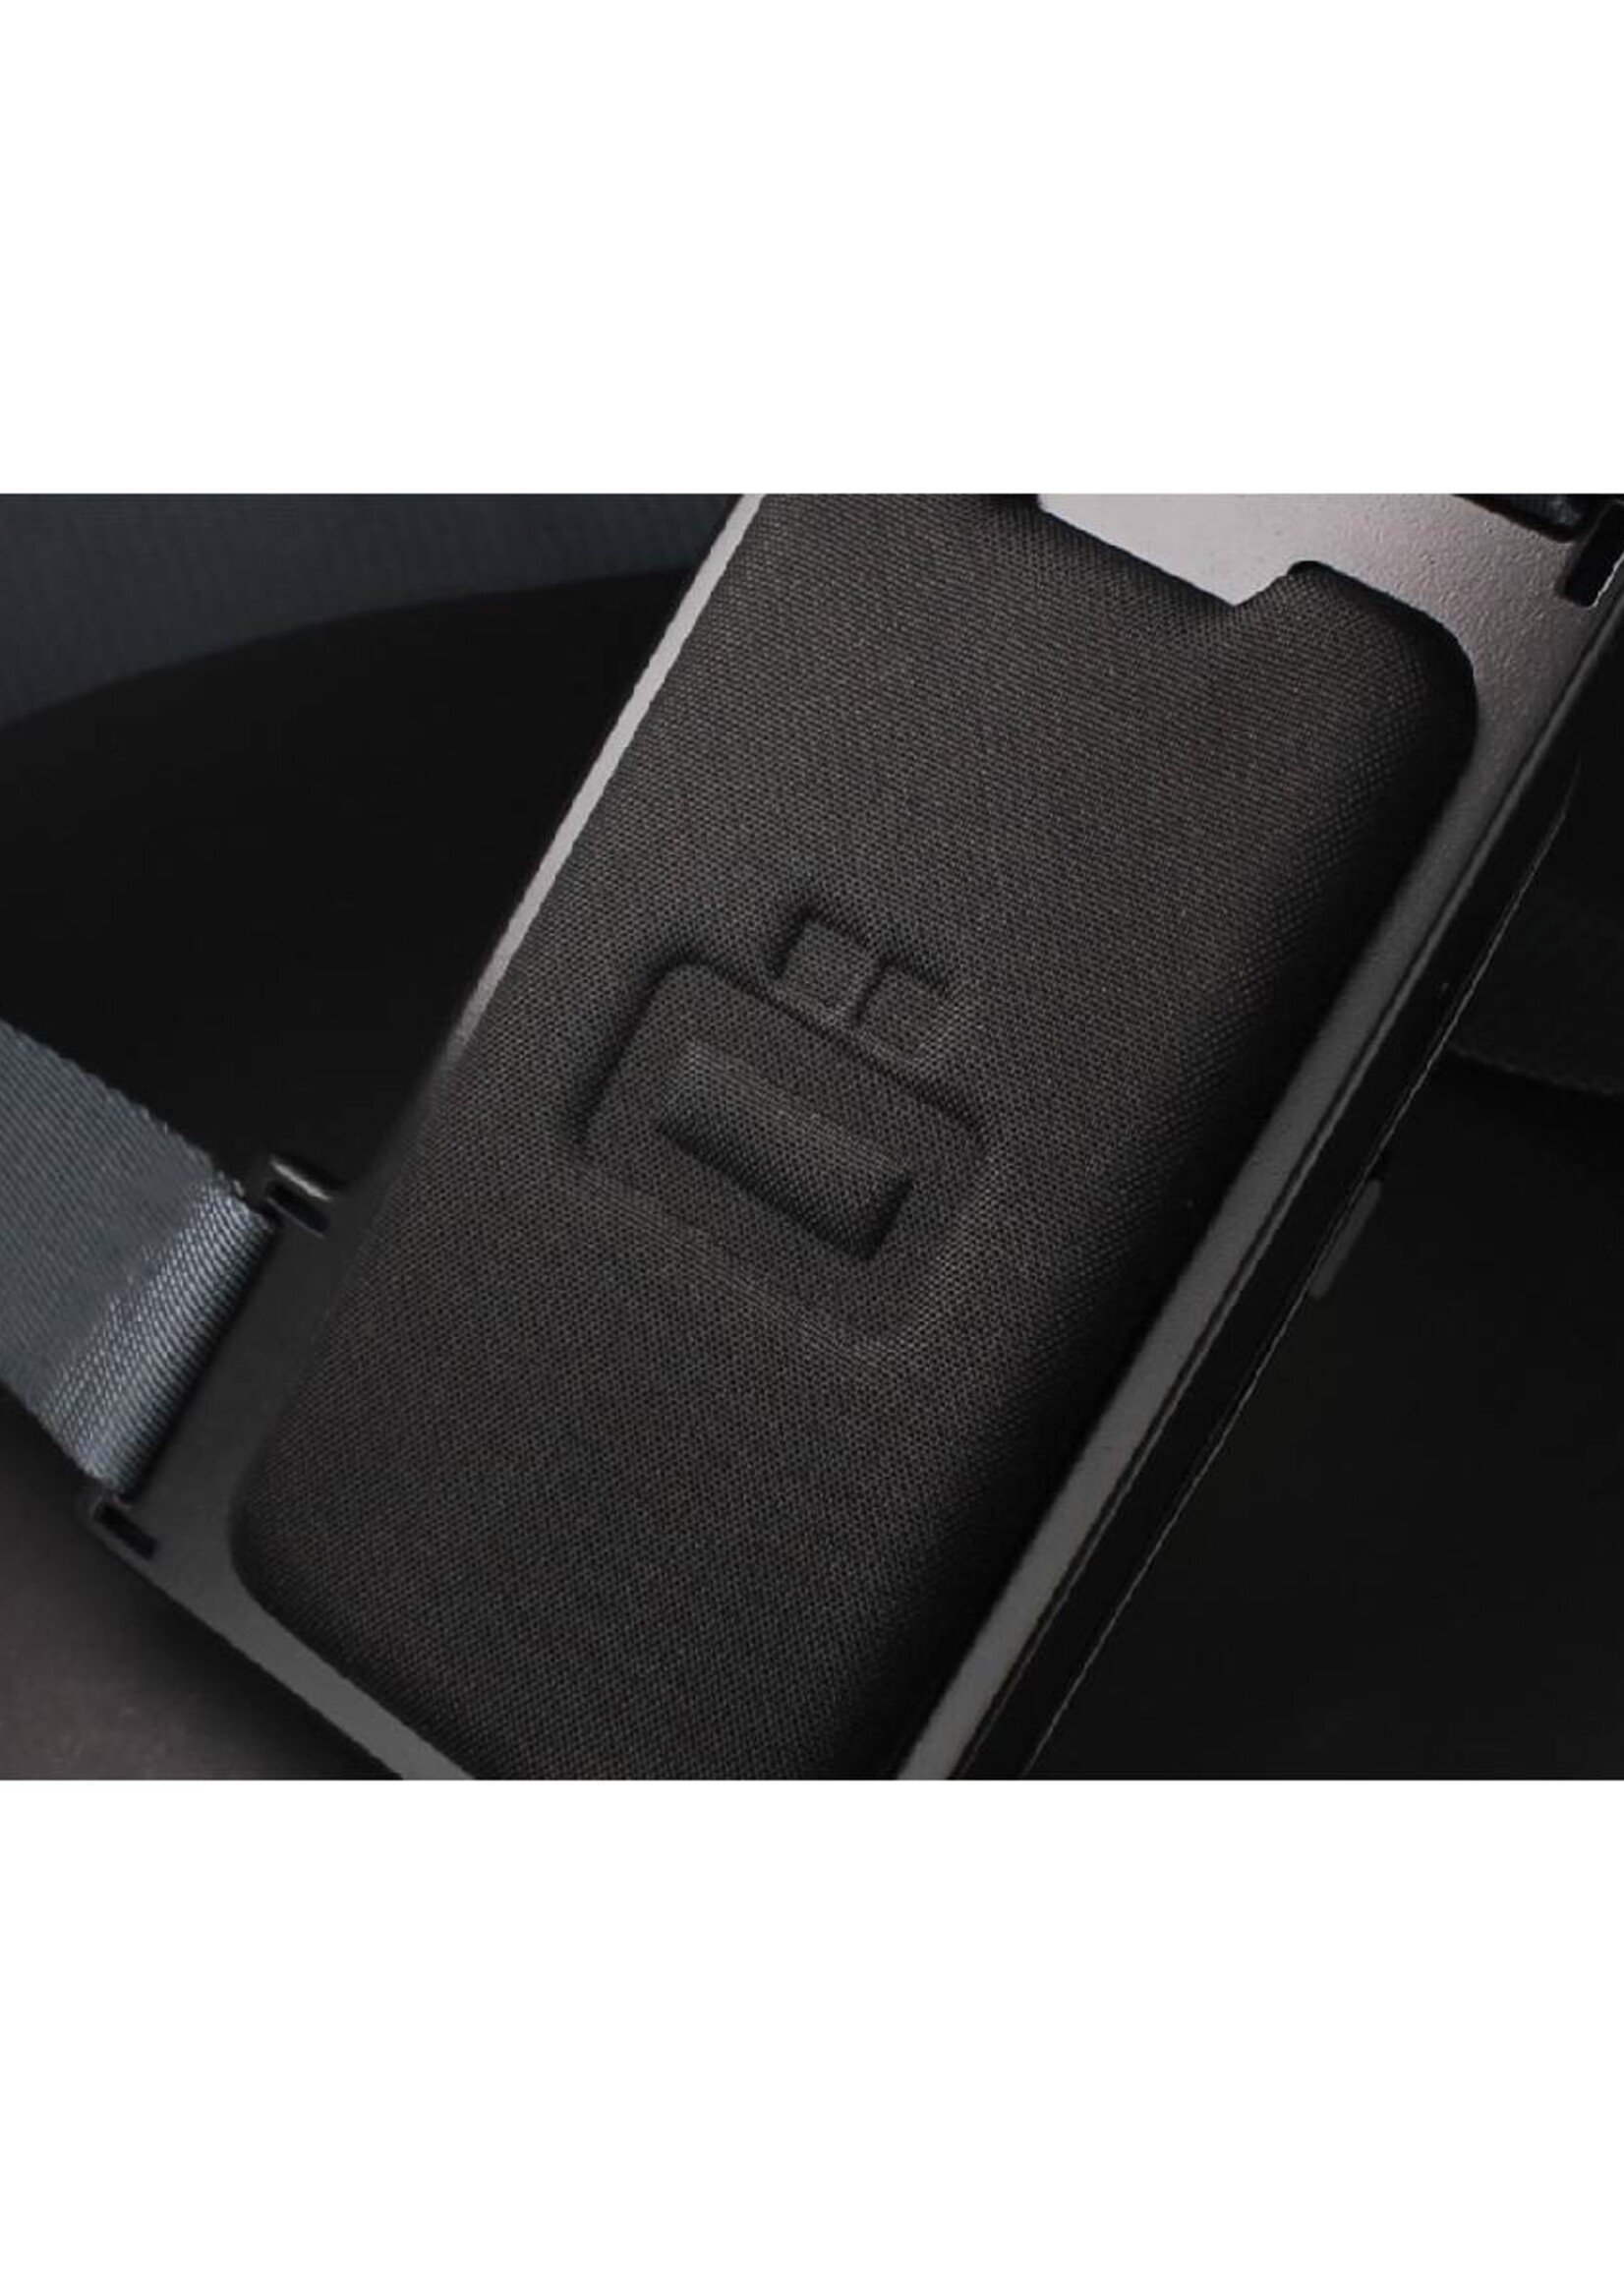 Ögon Design Phone Bag & Wallet Carbon